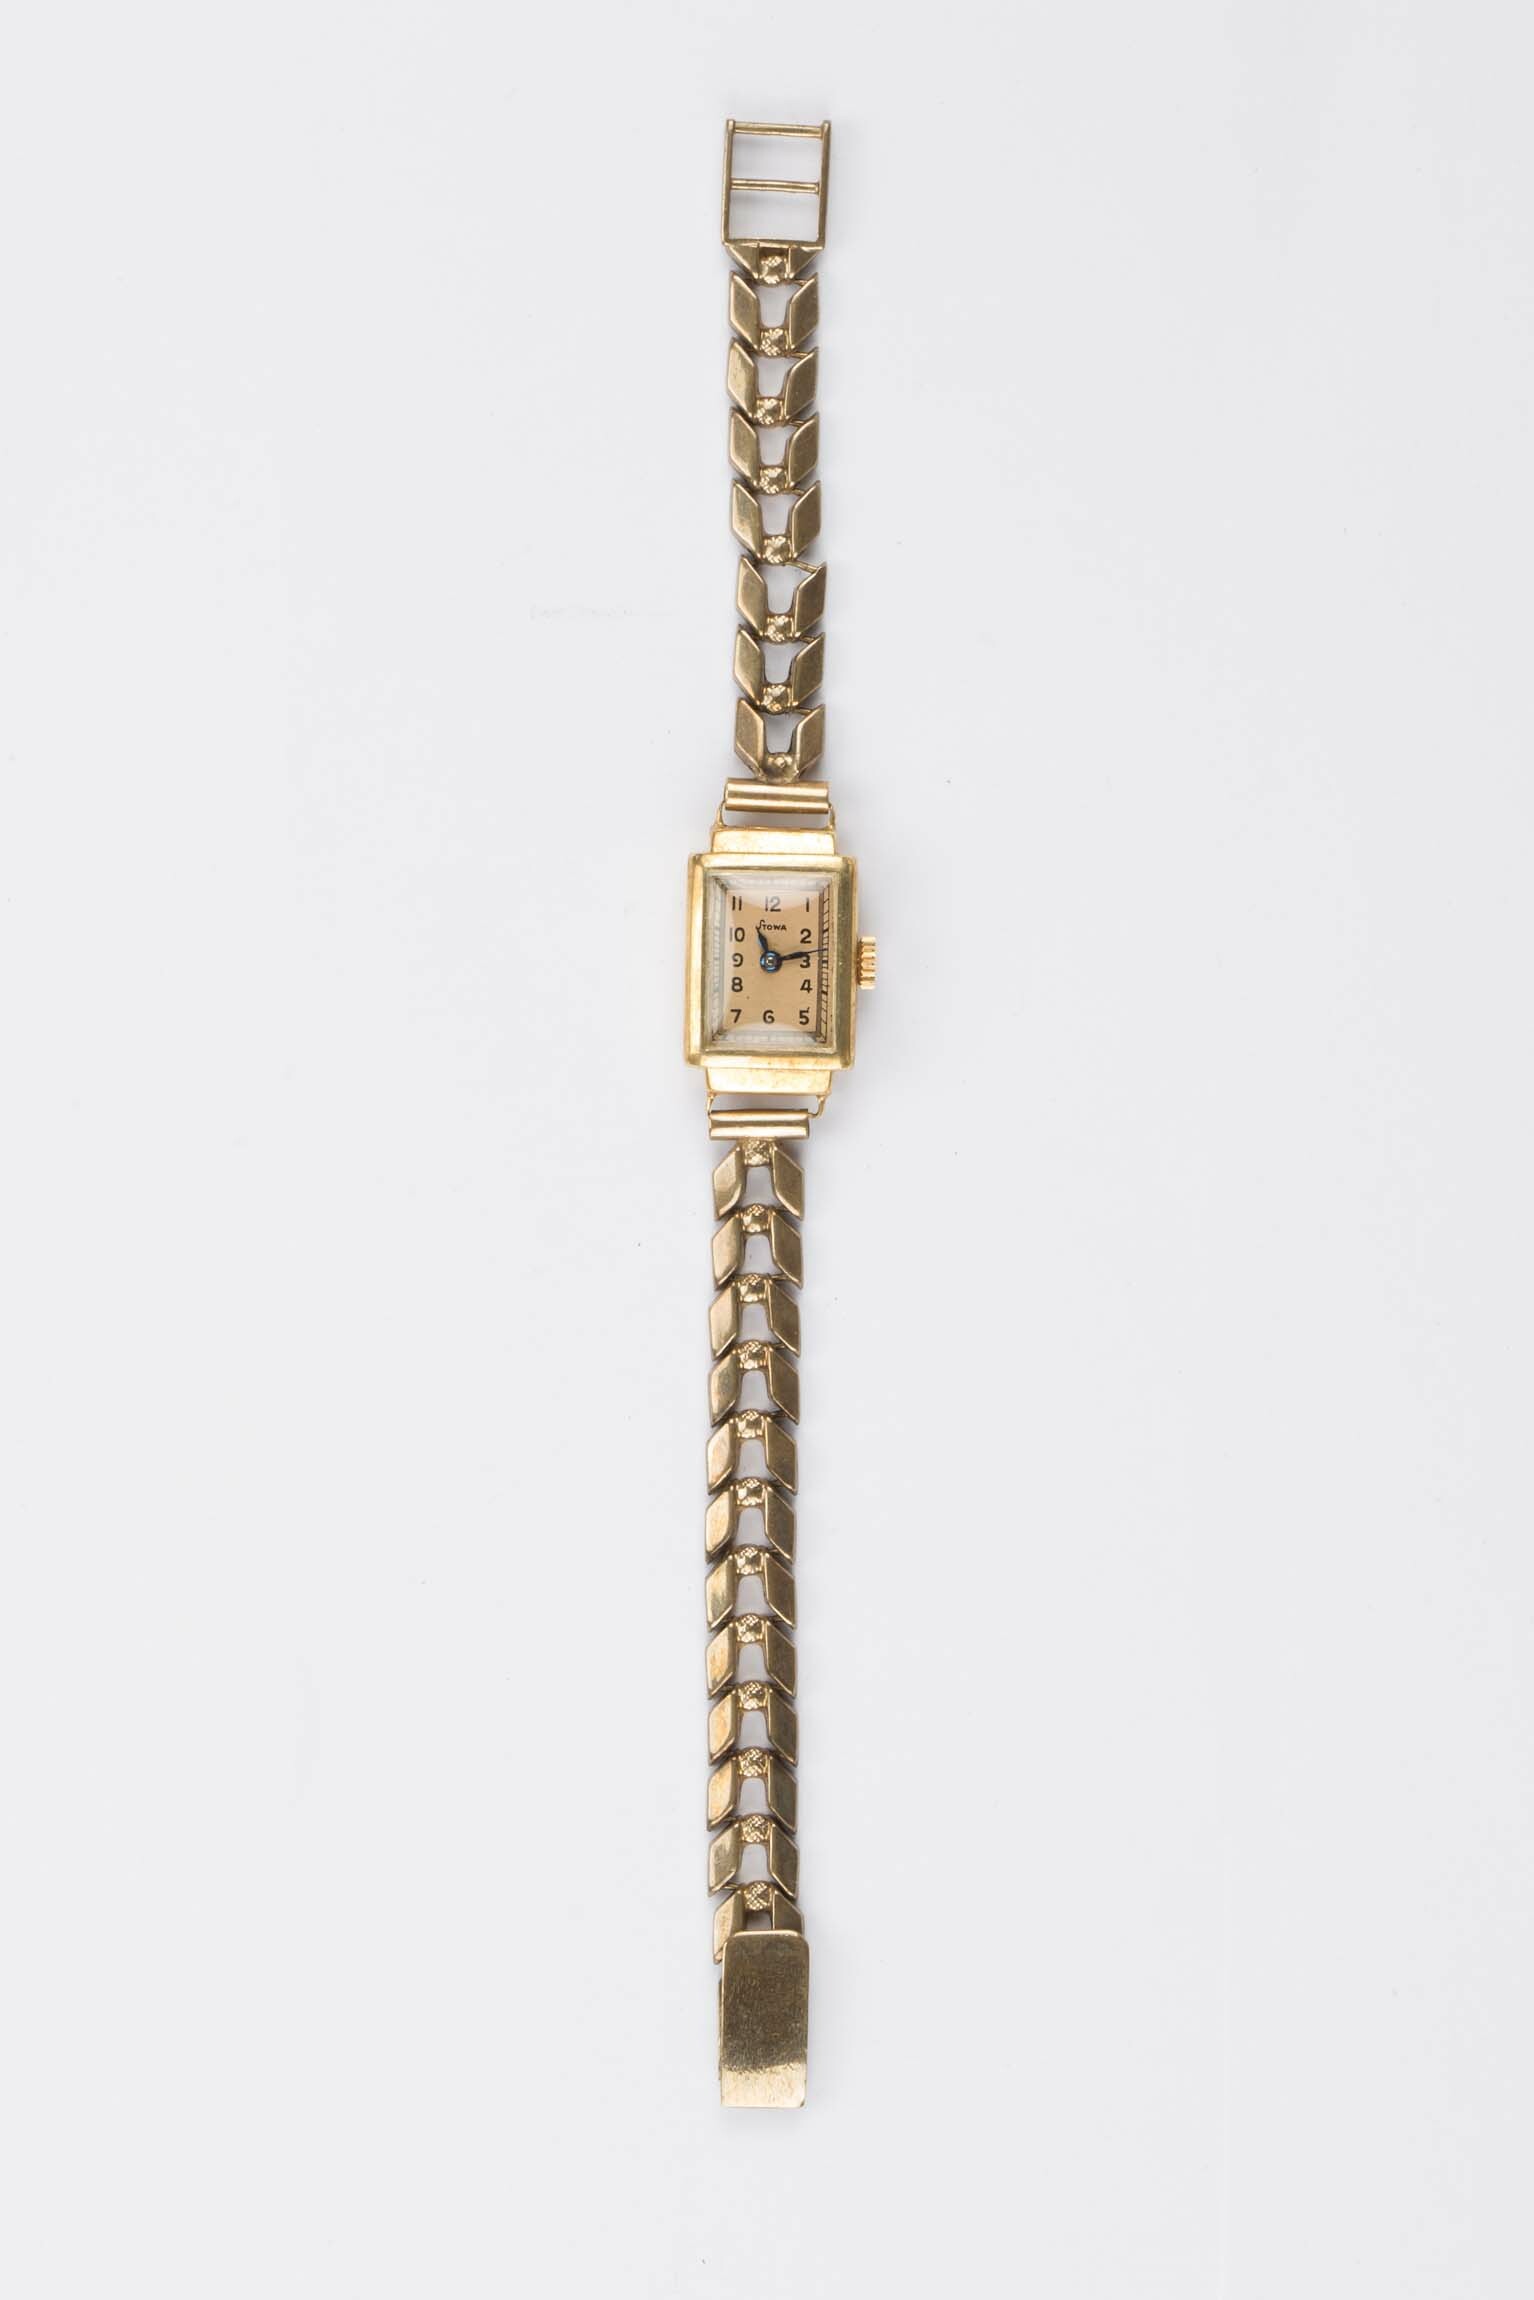 Armbanduhr, Stowa, Pforzheim um 1940 (Deutsches Uhrenmuseum CC BY-SA)